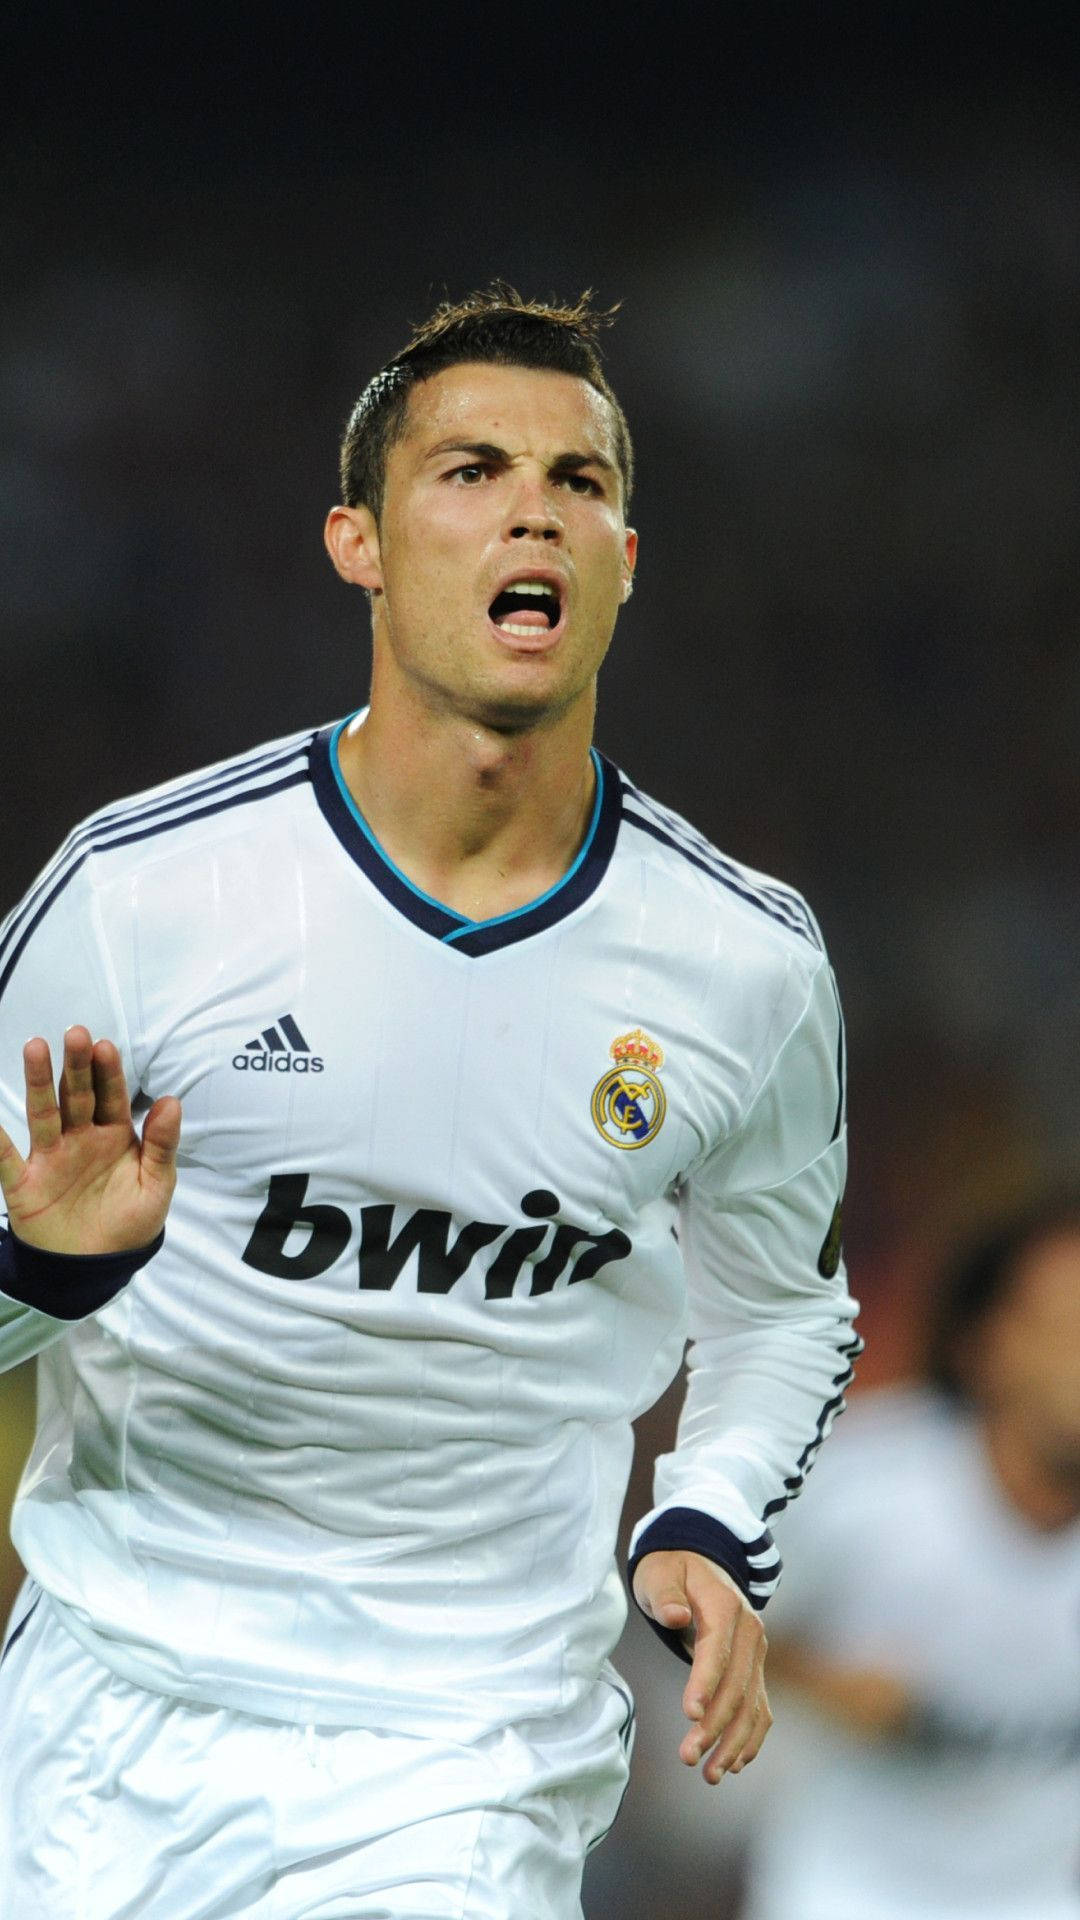 Papelde Parede Bwin Logo Cristiano Ronaldo Iphone. Papel de Parede